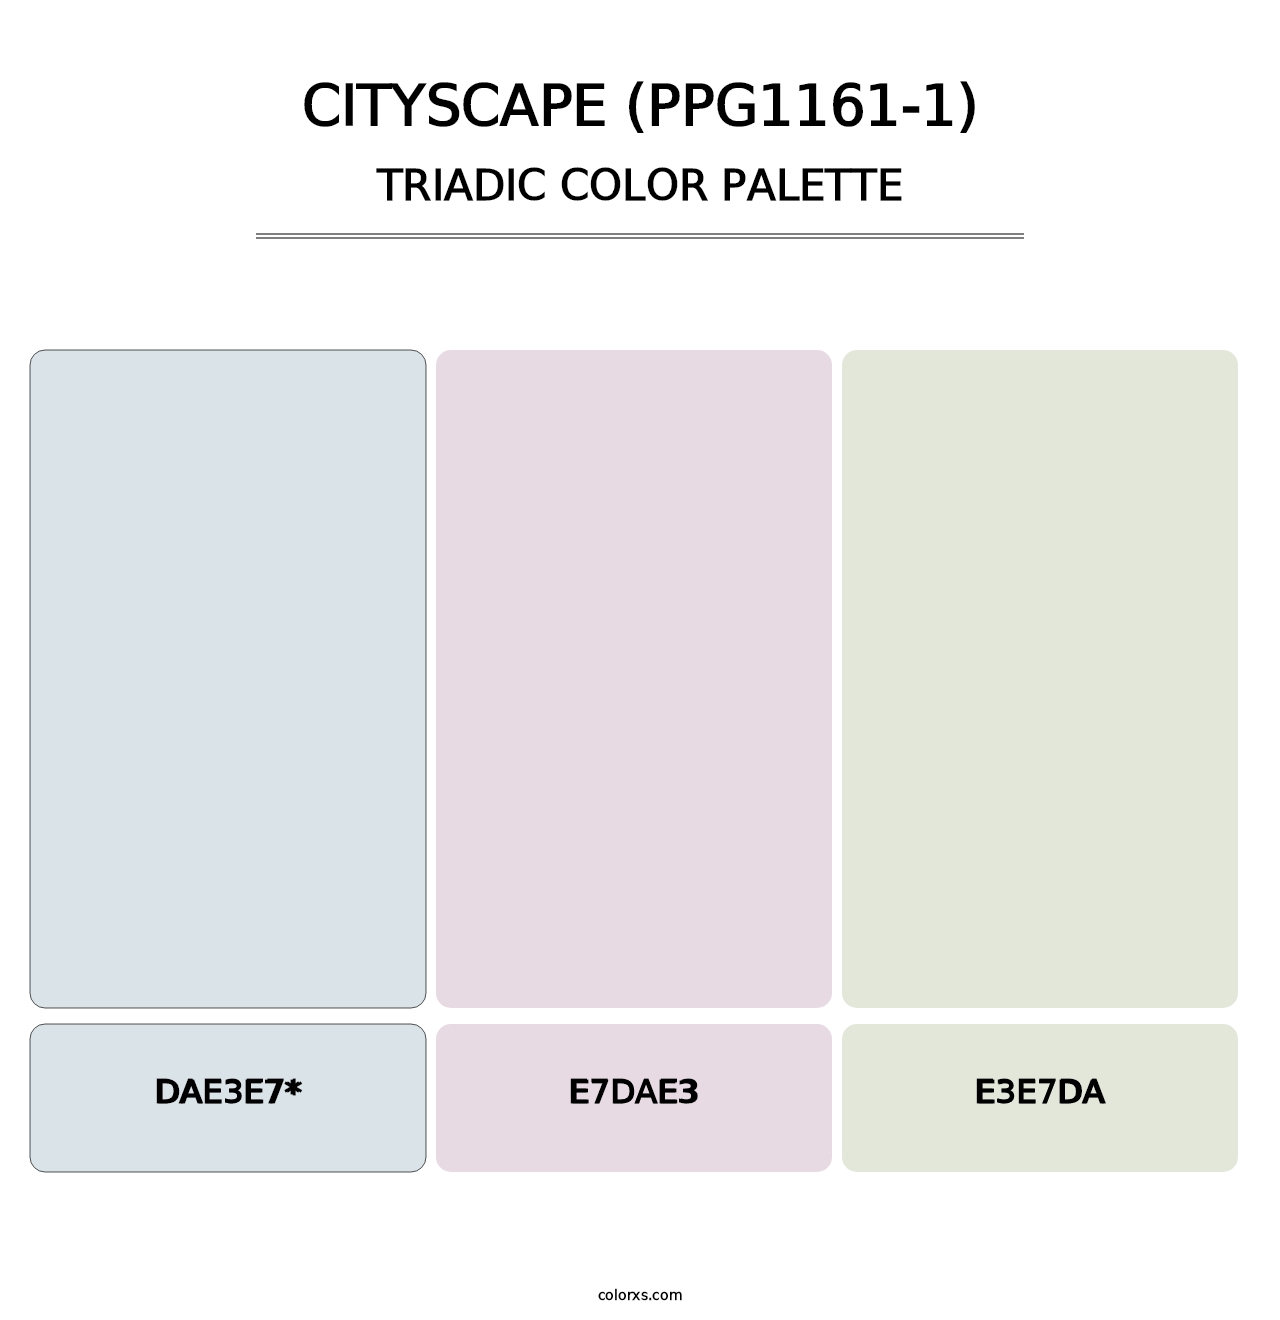 Cityscape (PPG1161-1) - Triadic Color Palette